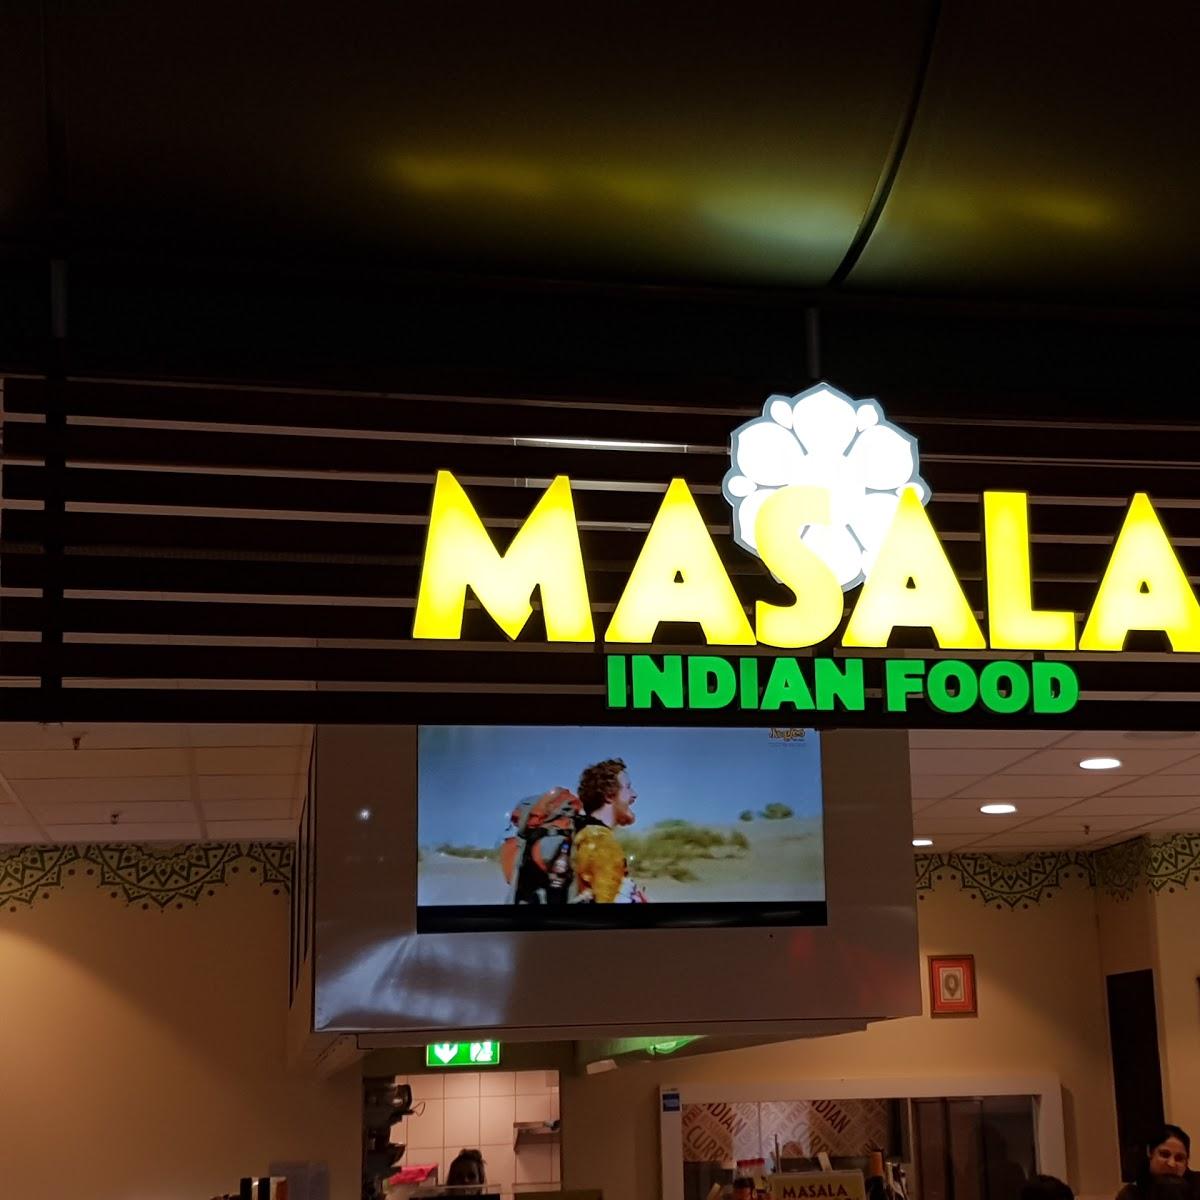 Restaurant "Masala Indian Food" in Leipzig